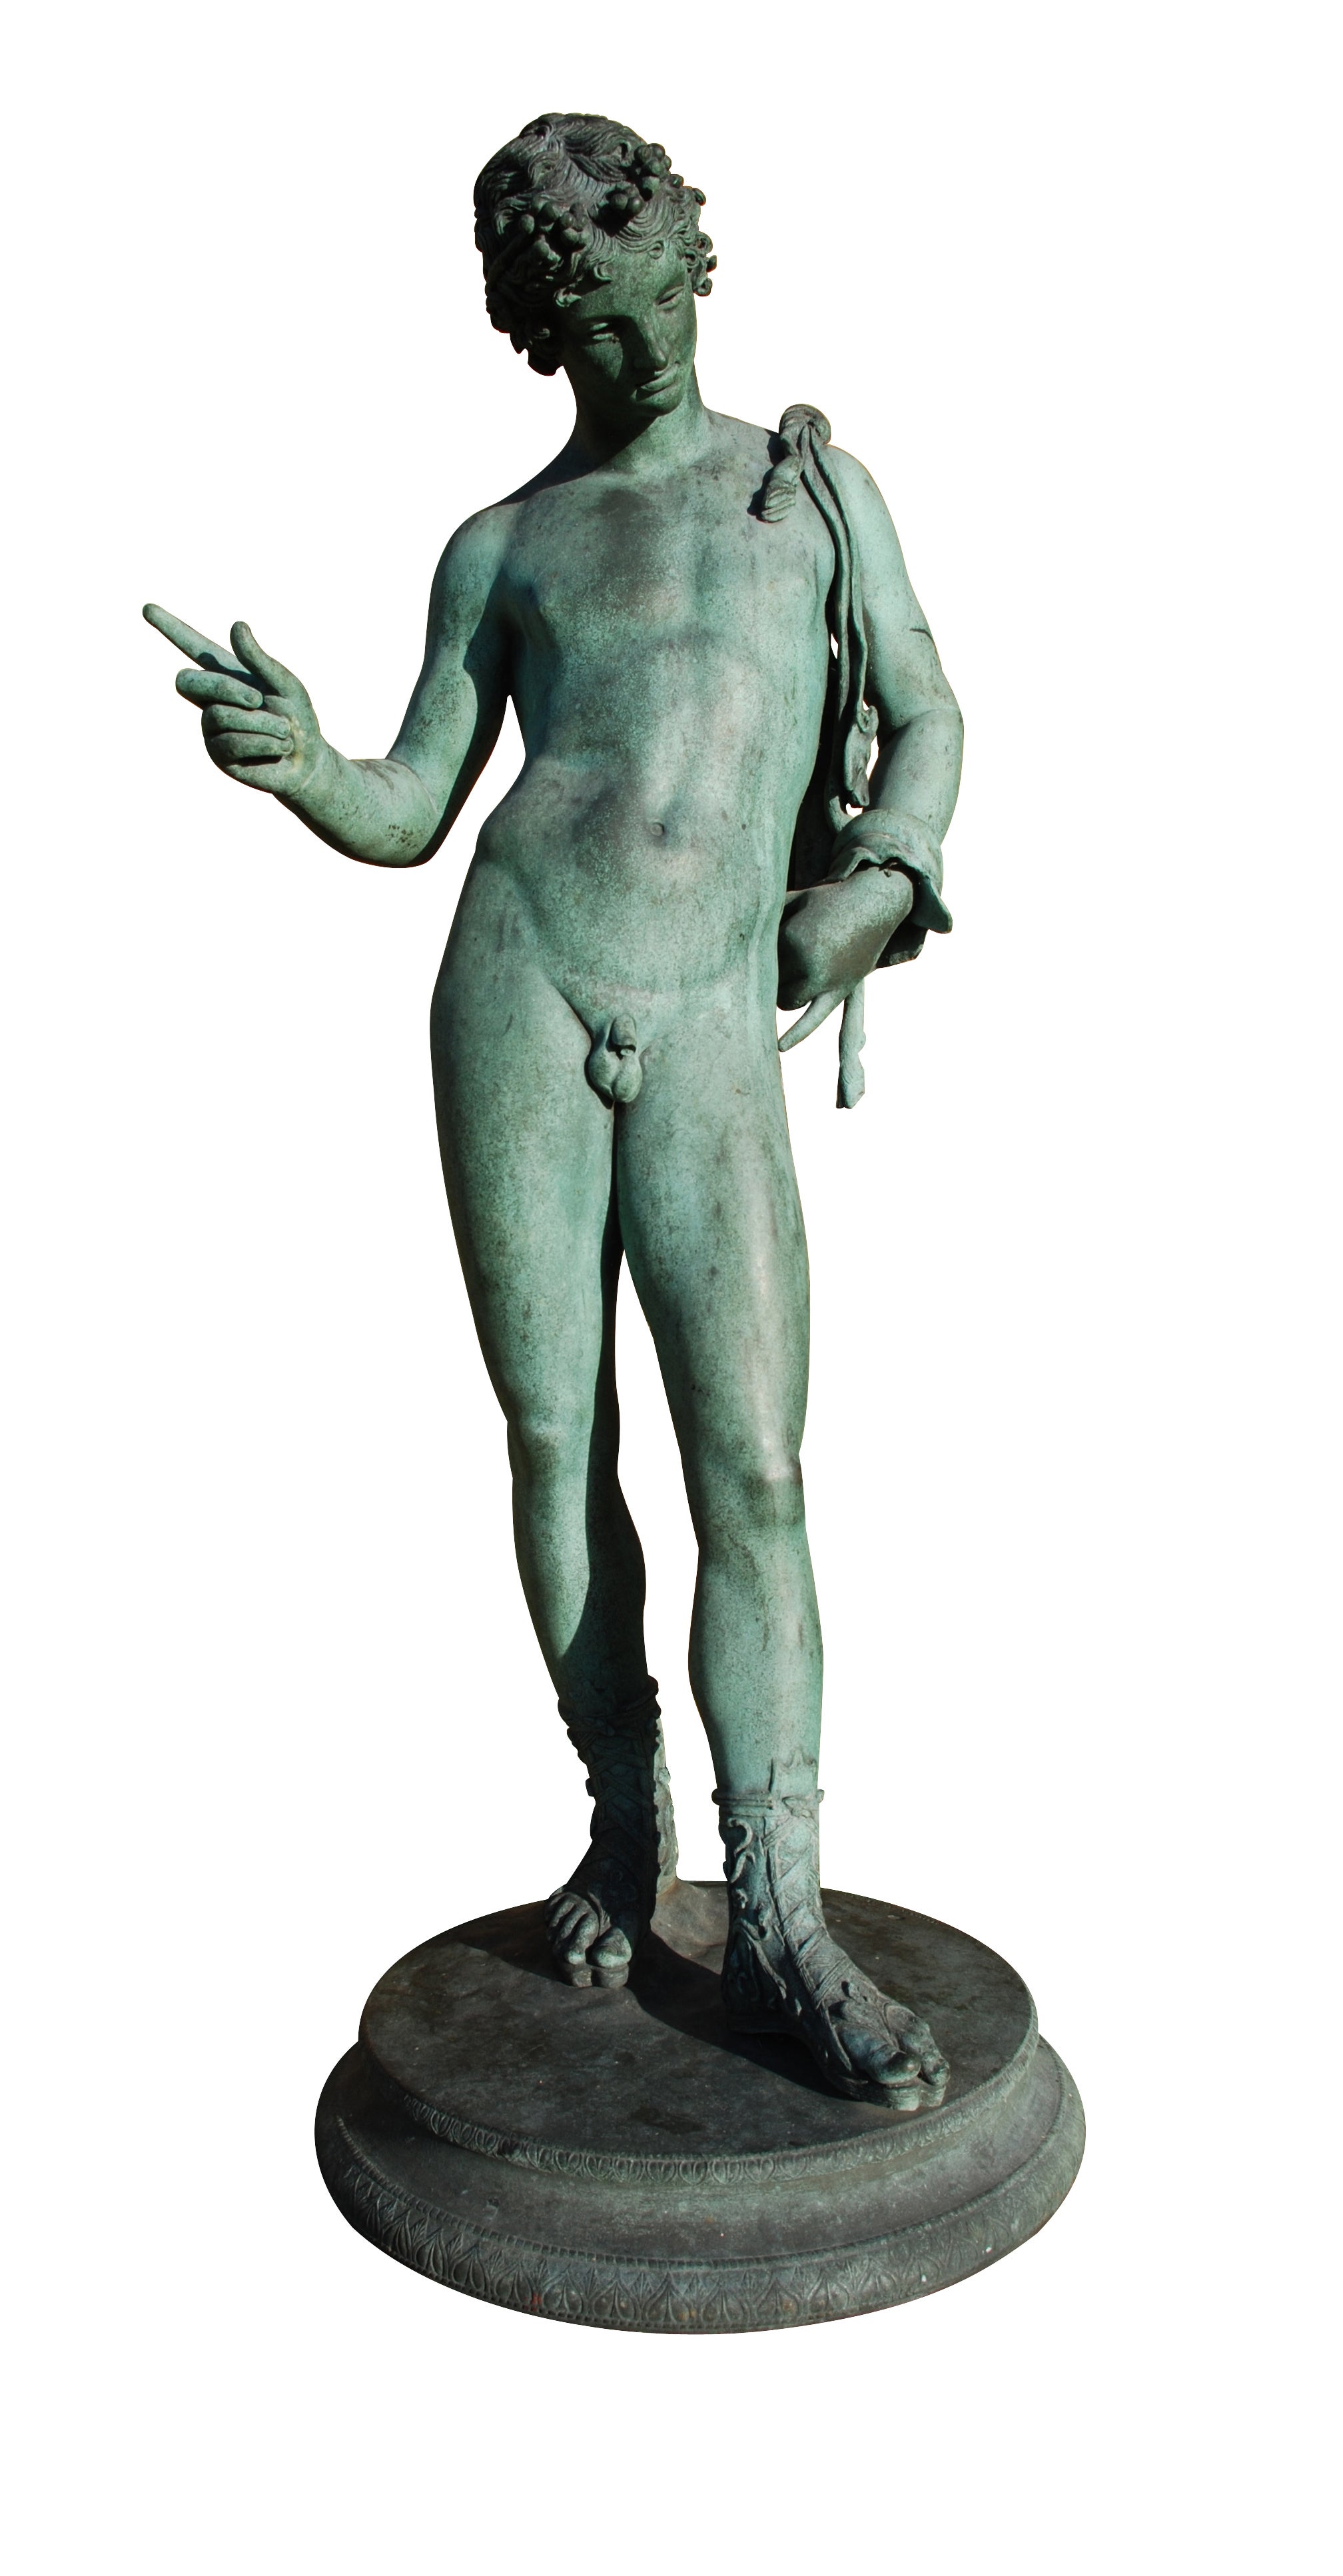 A Neapolitan bronze figure of Narcissus